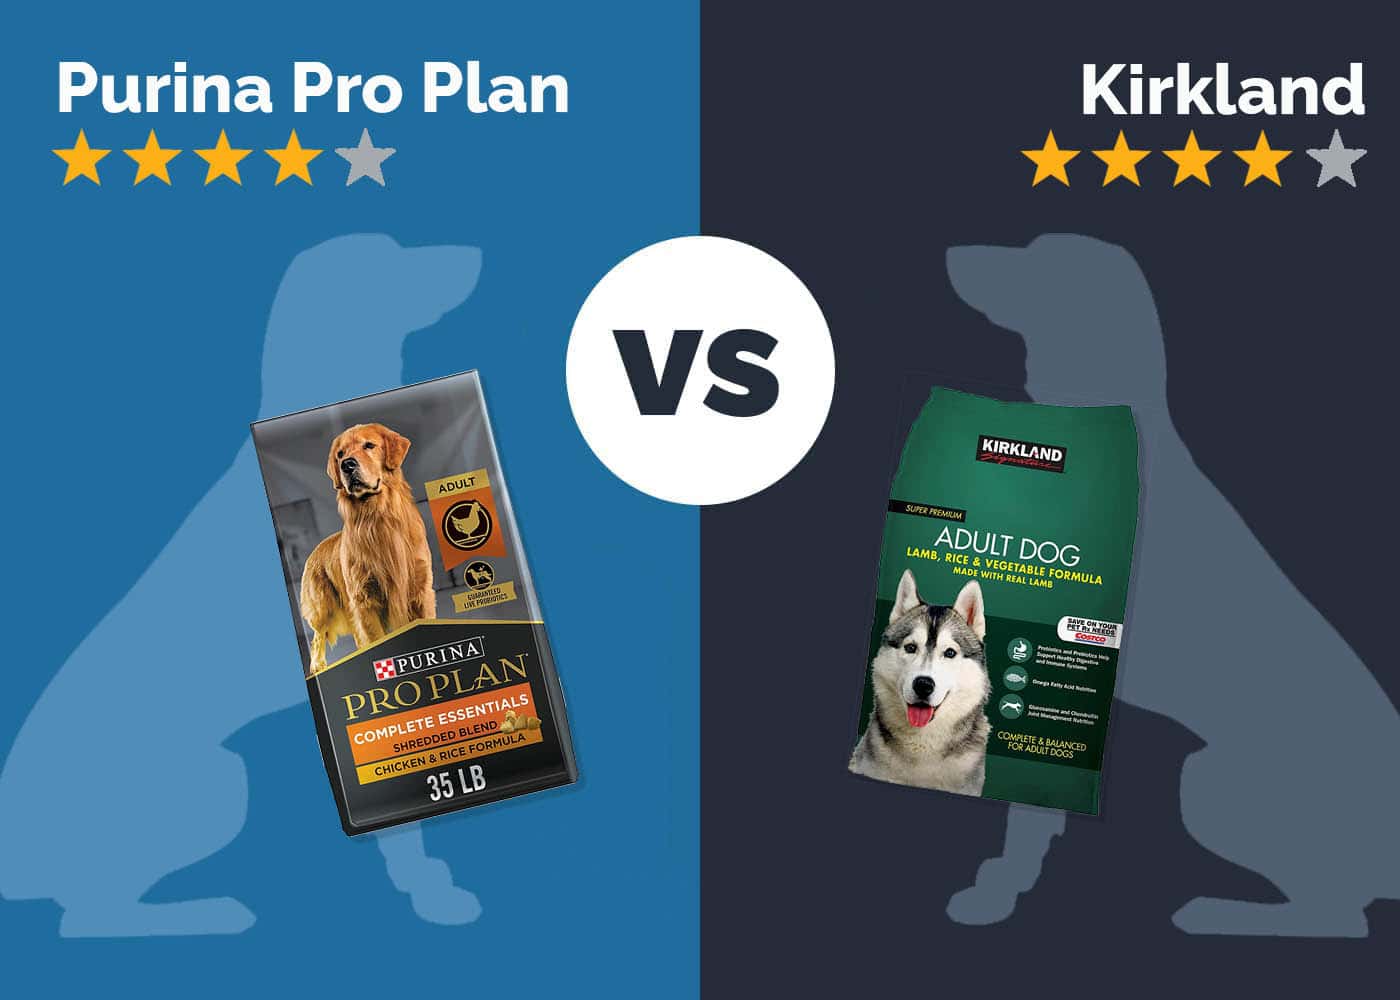 Purina Pro Plan vs Kirkland